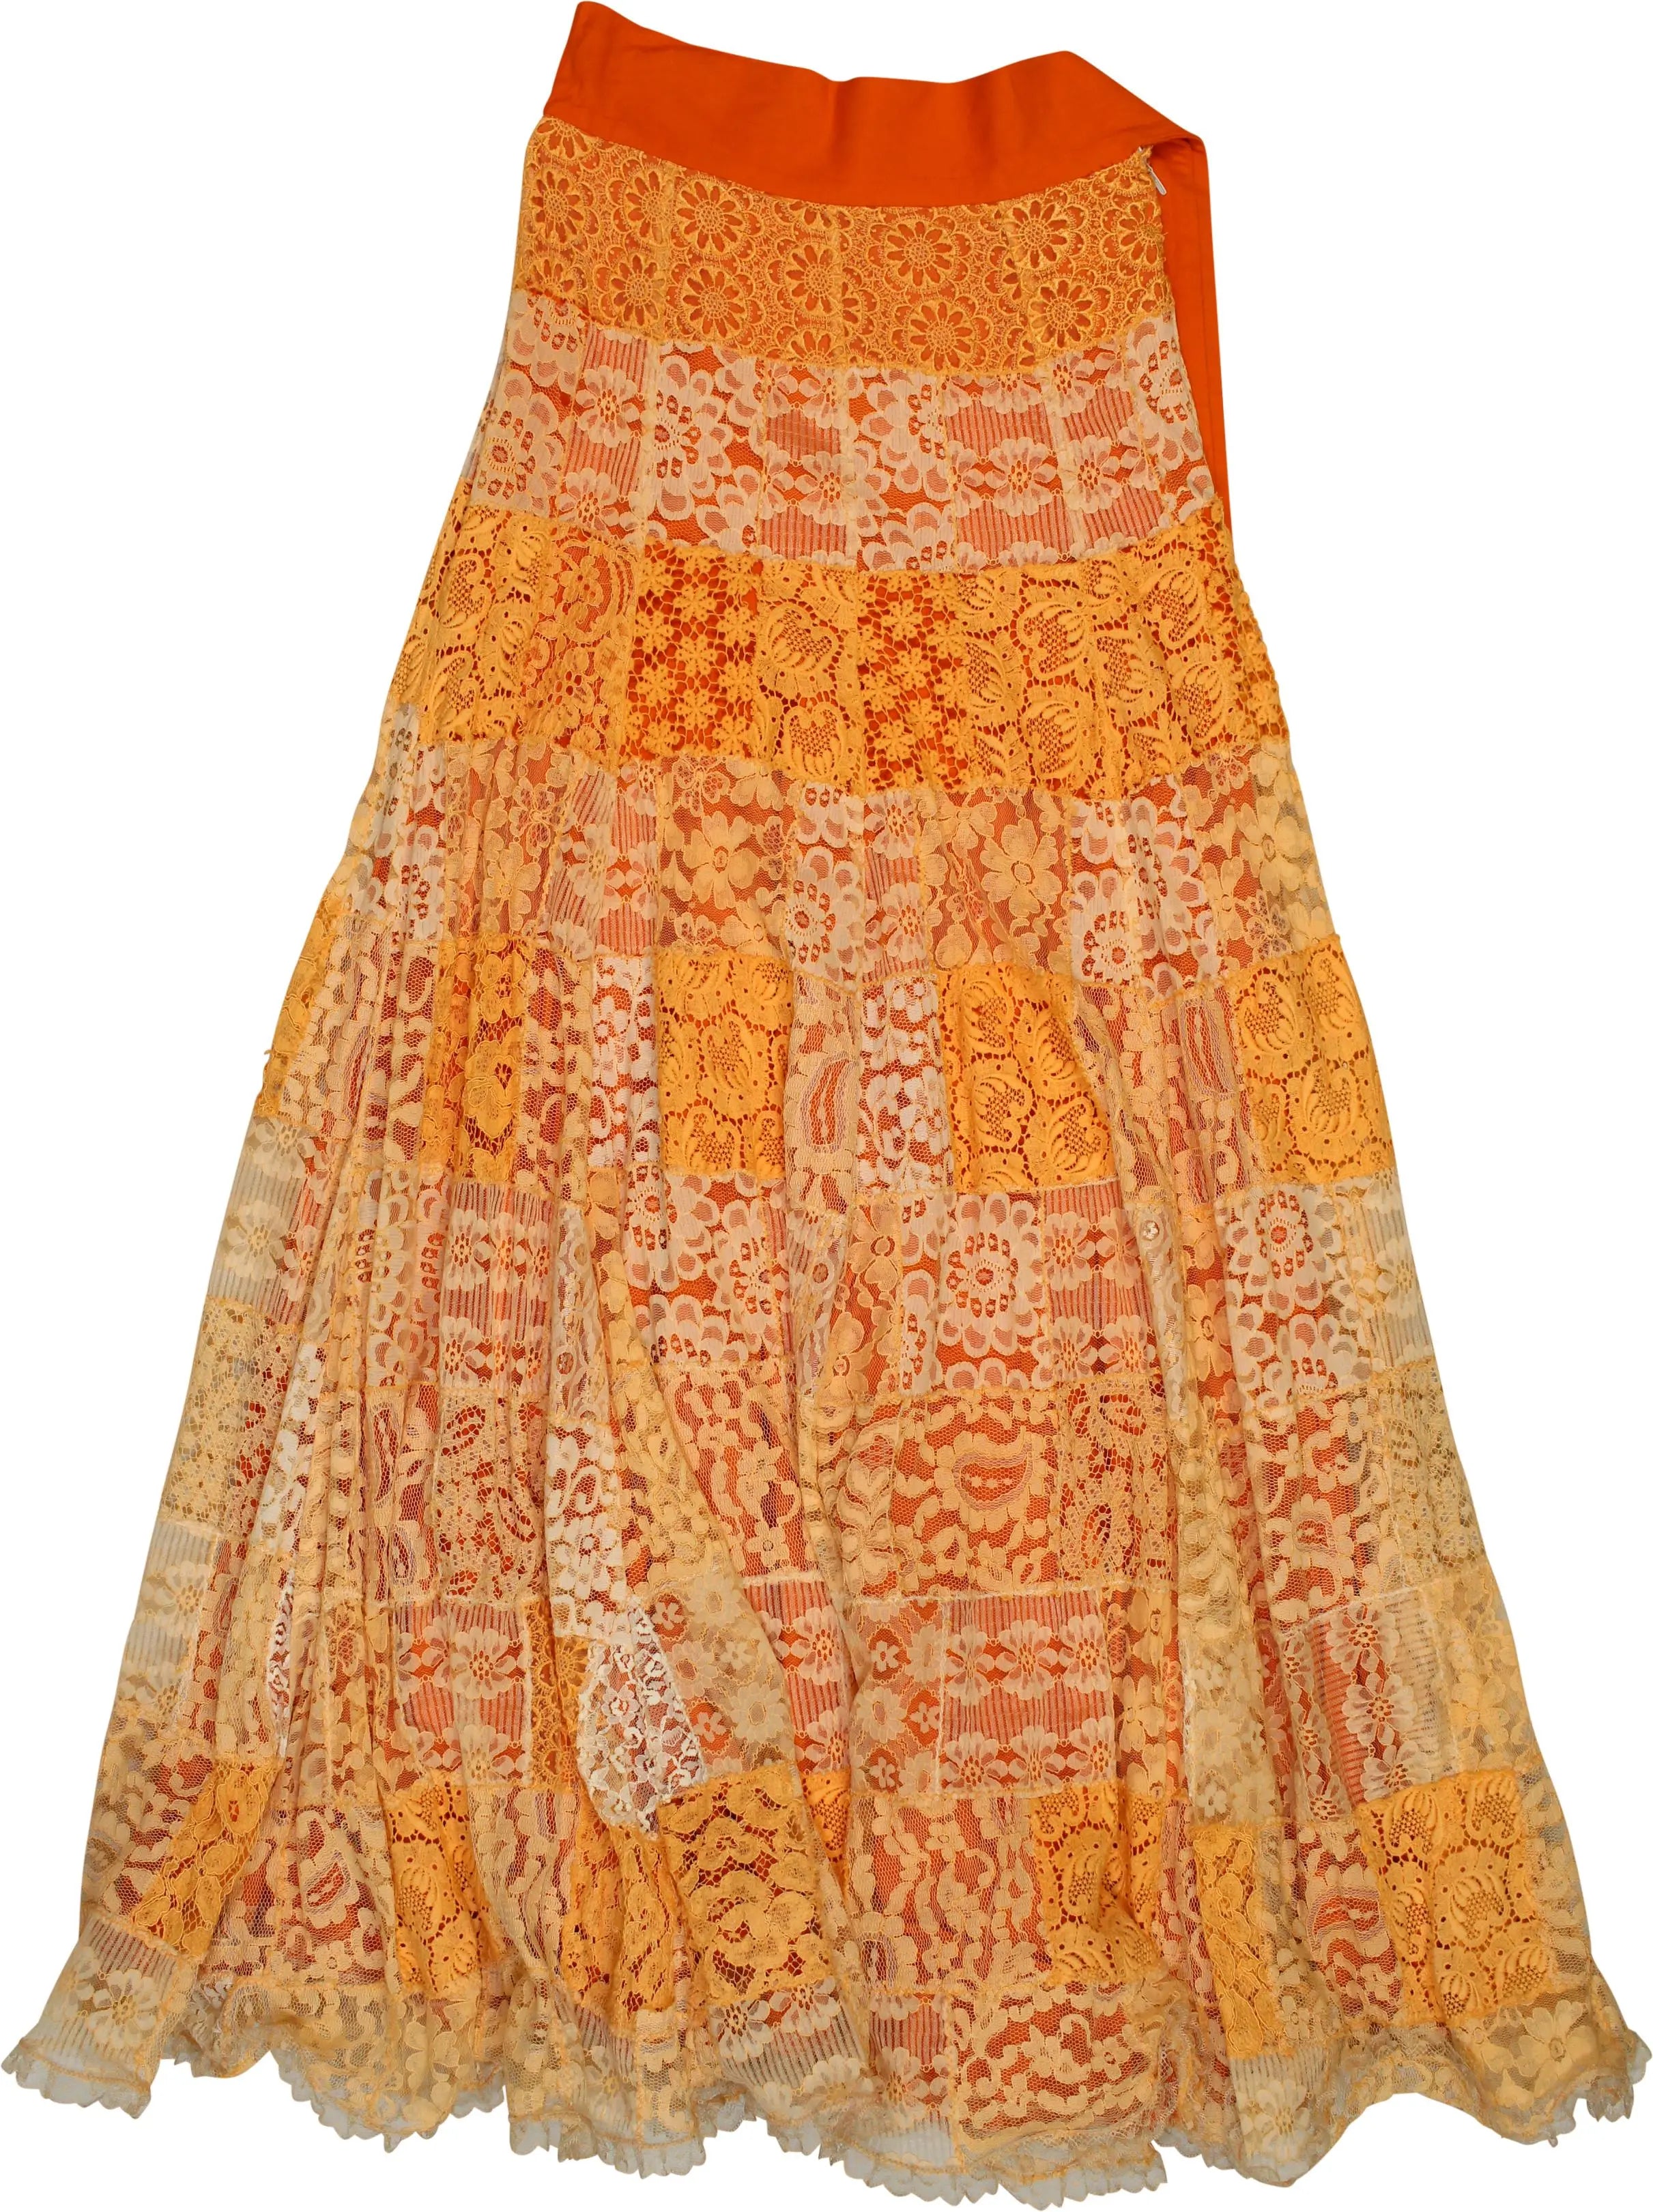 Handmade - Handmade Maxi Skirt- ThriftTale.com - Vintage and second handclothing